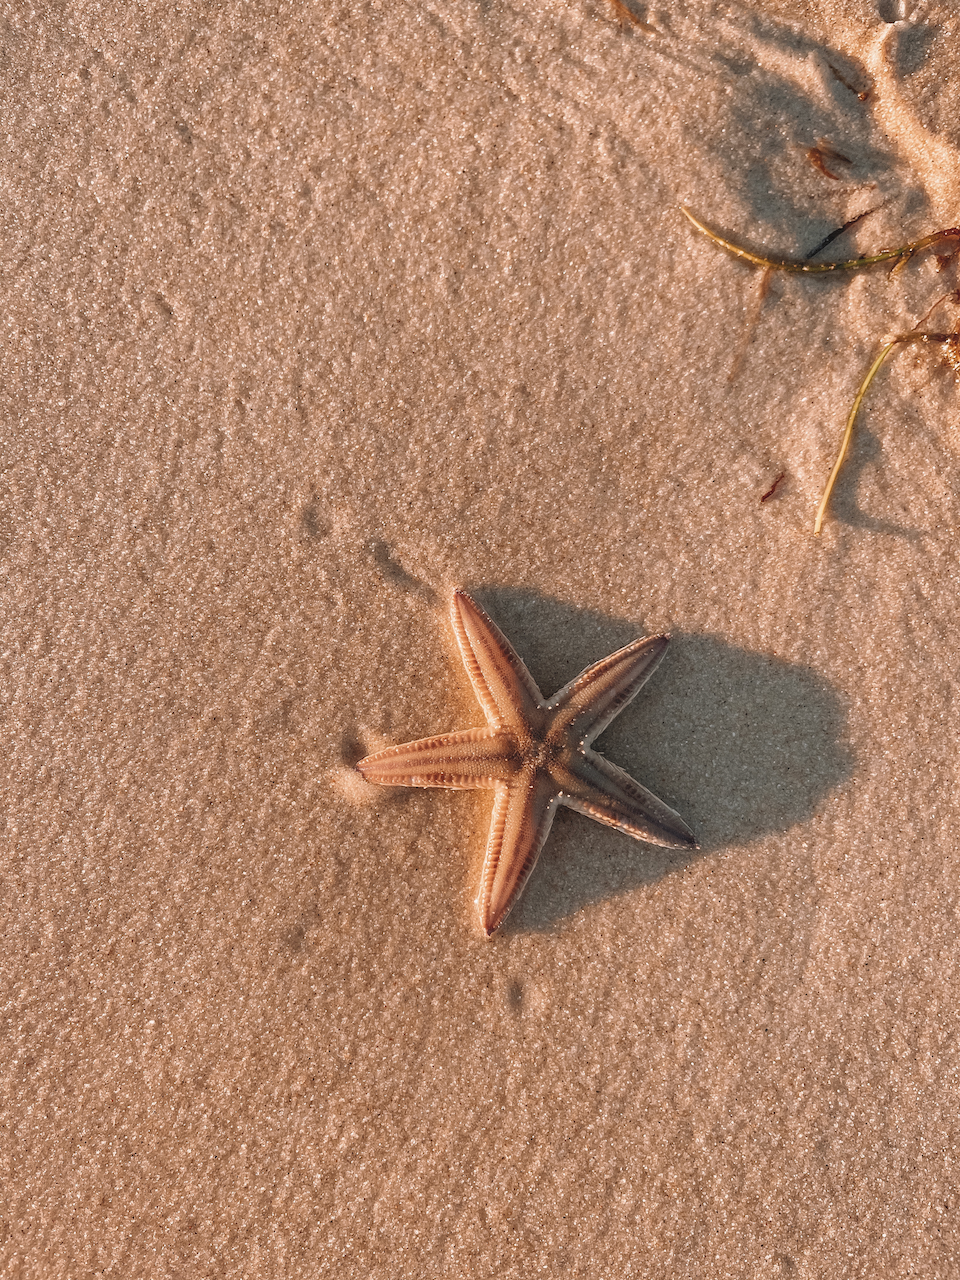 A starfish - Moreton Island - Queensland - Australia